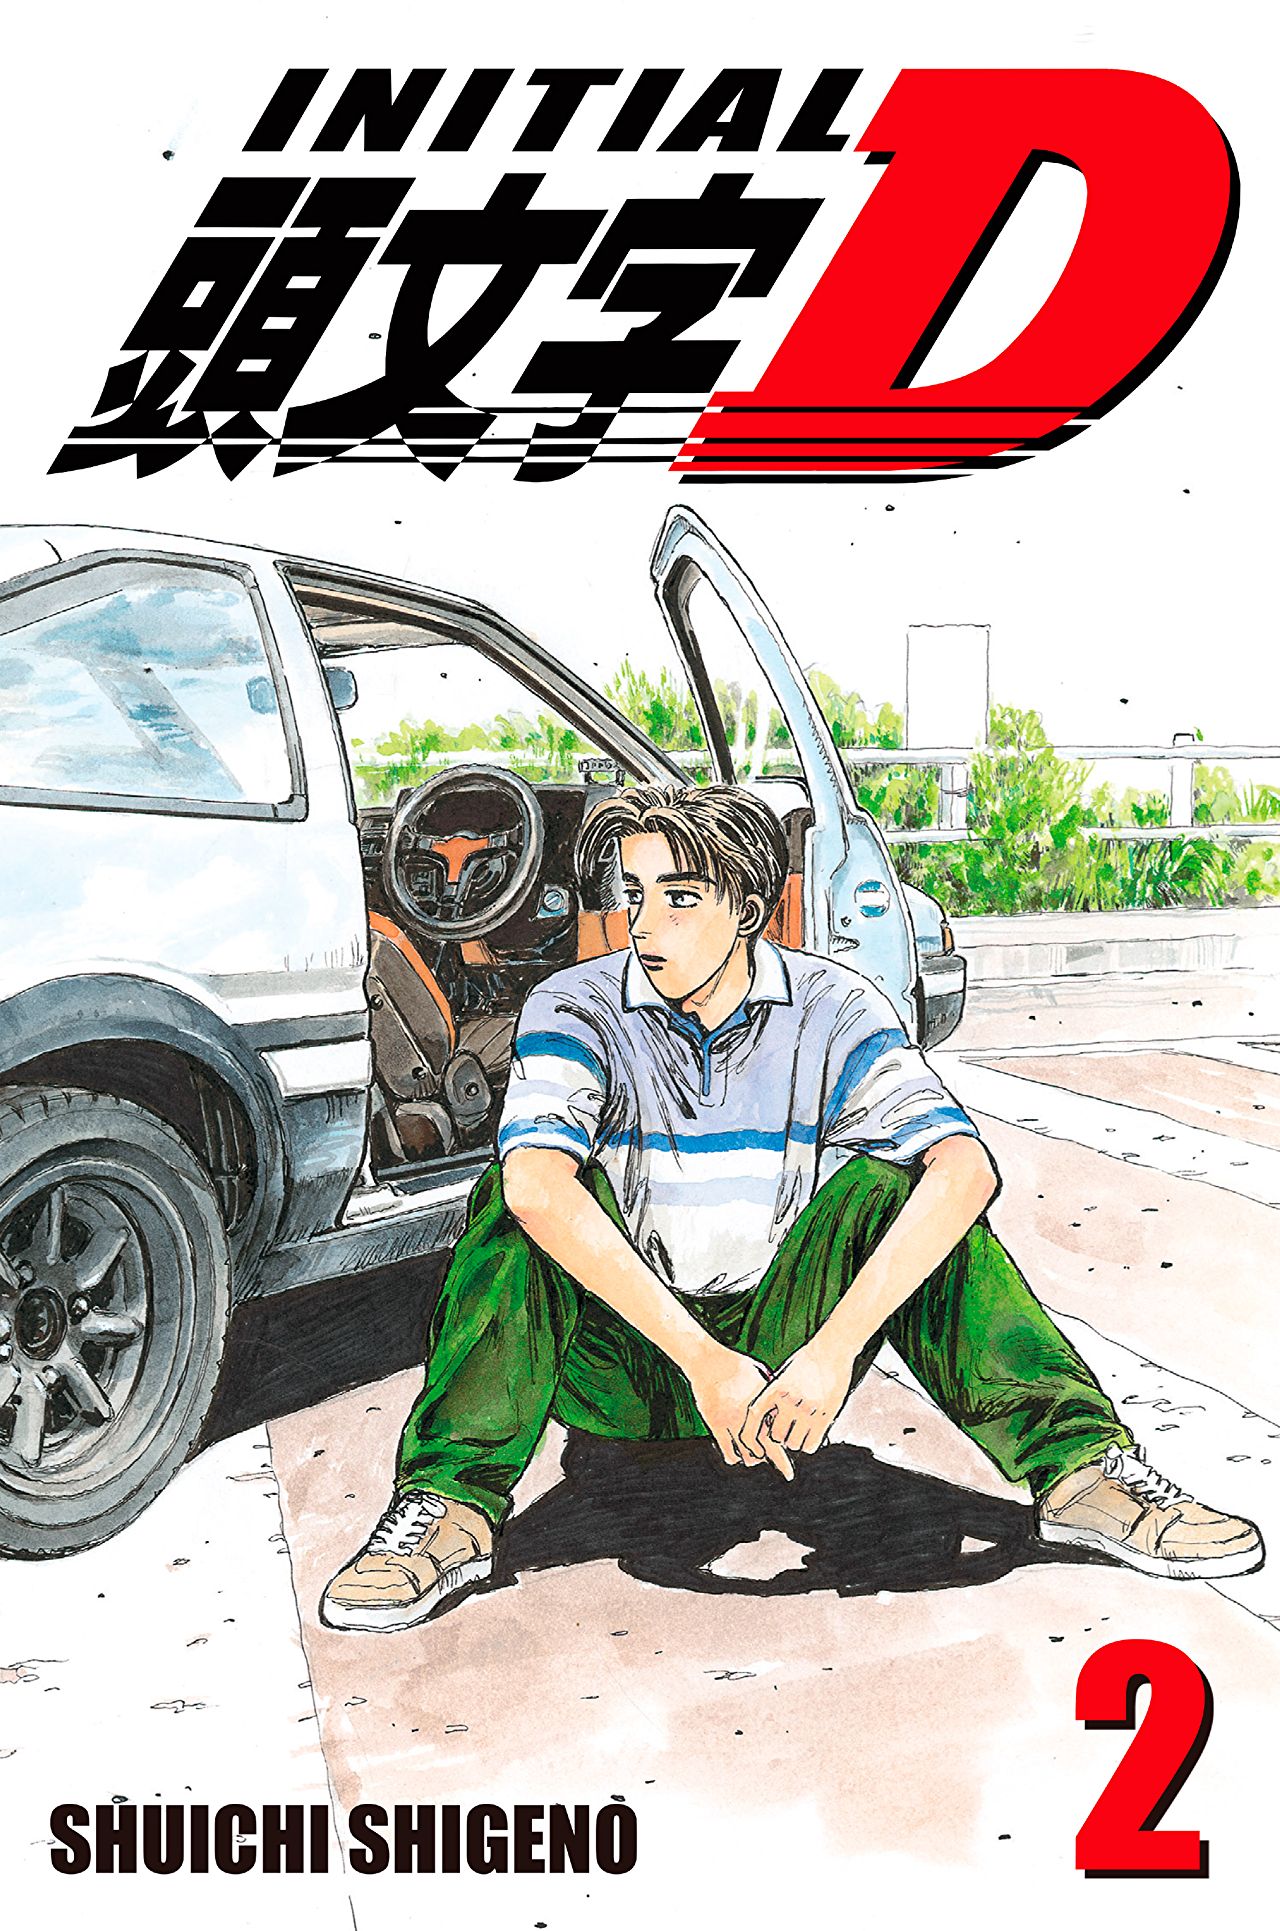 Initial D, initial d anime or manga 